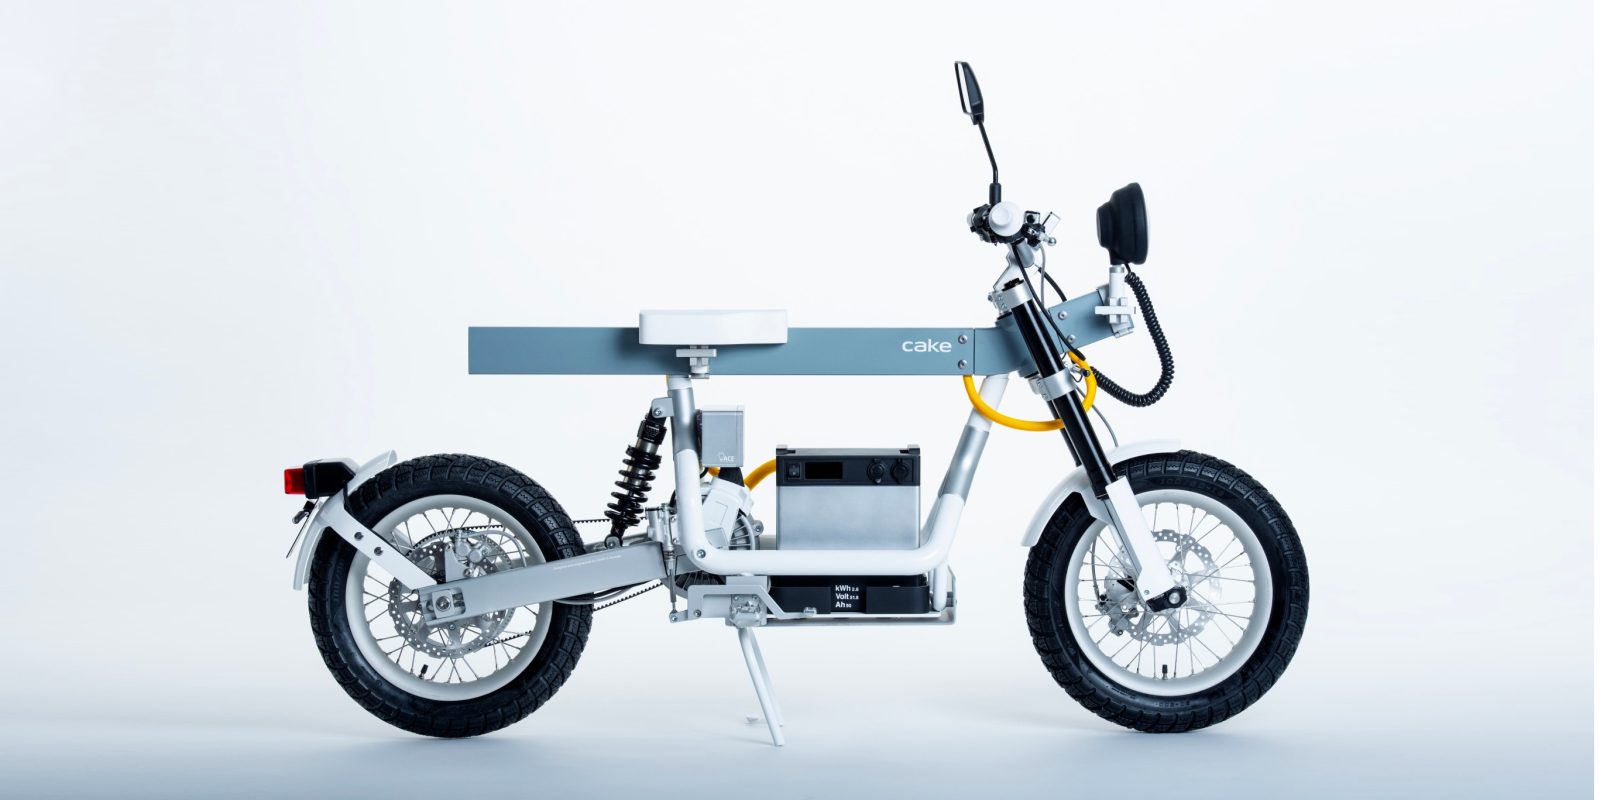 Cake Osa electric motorcycle